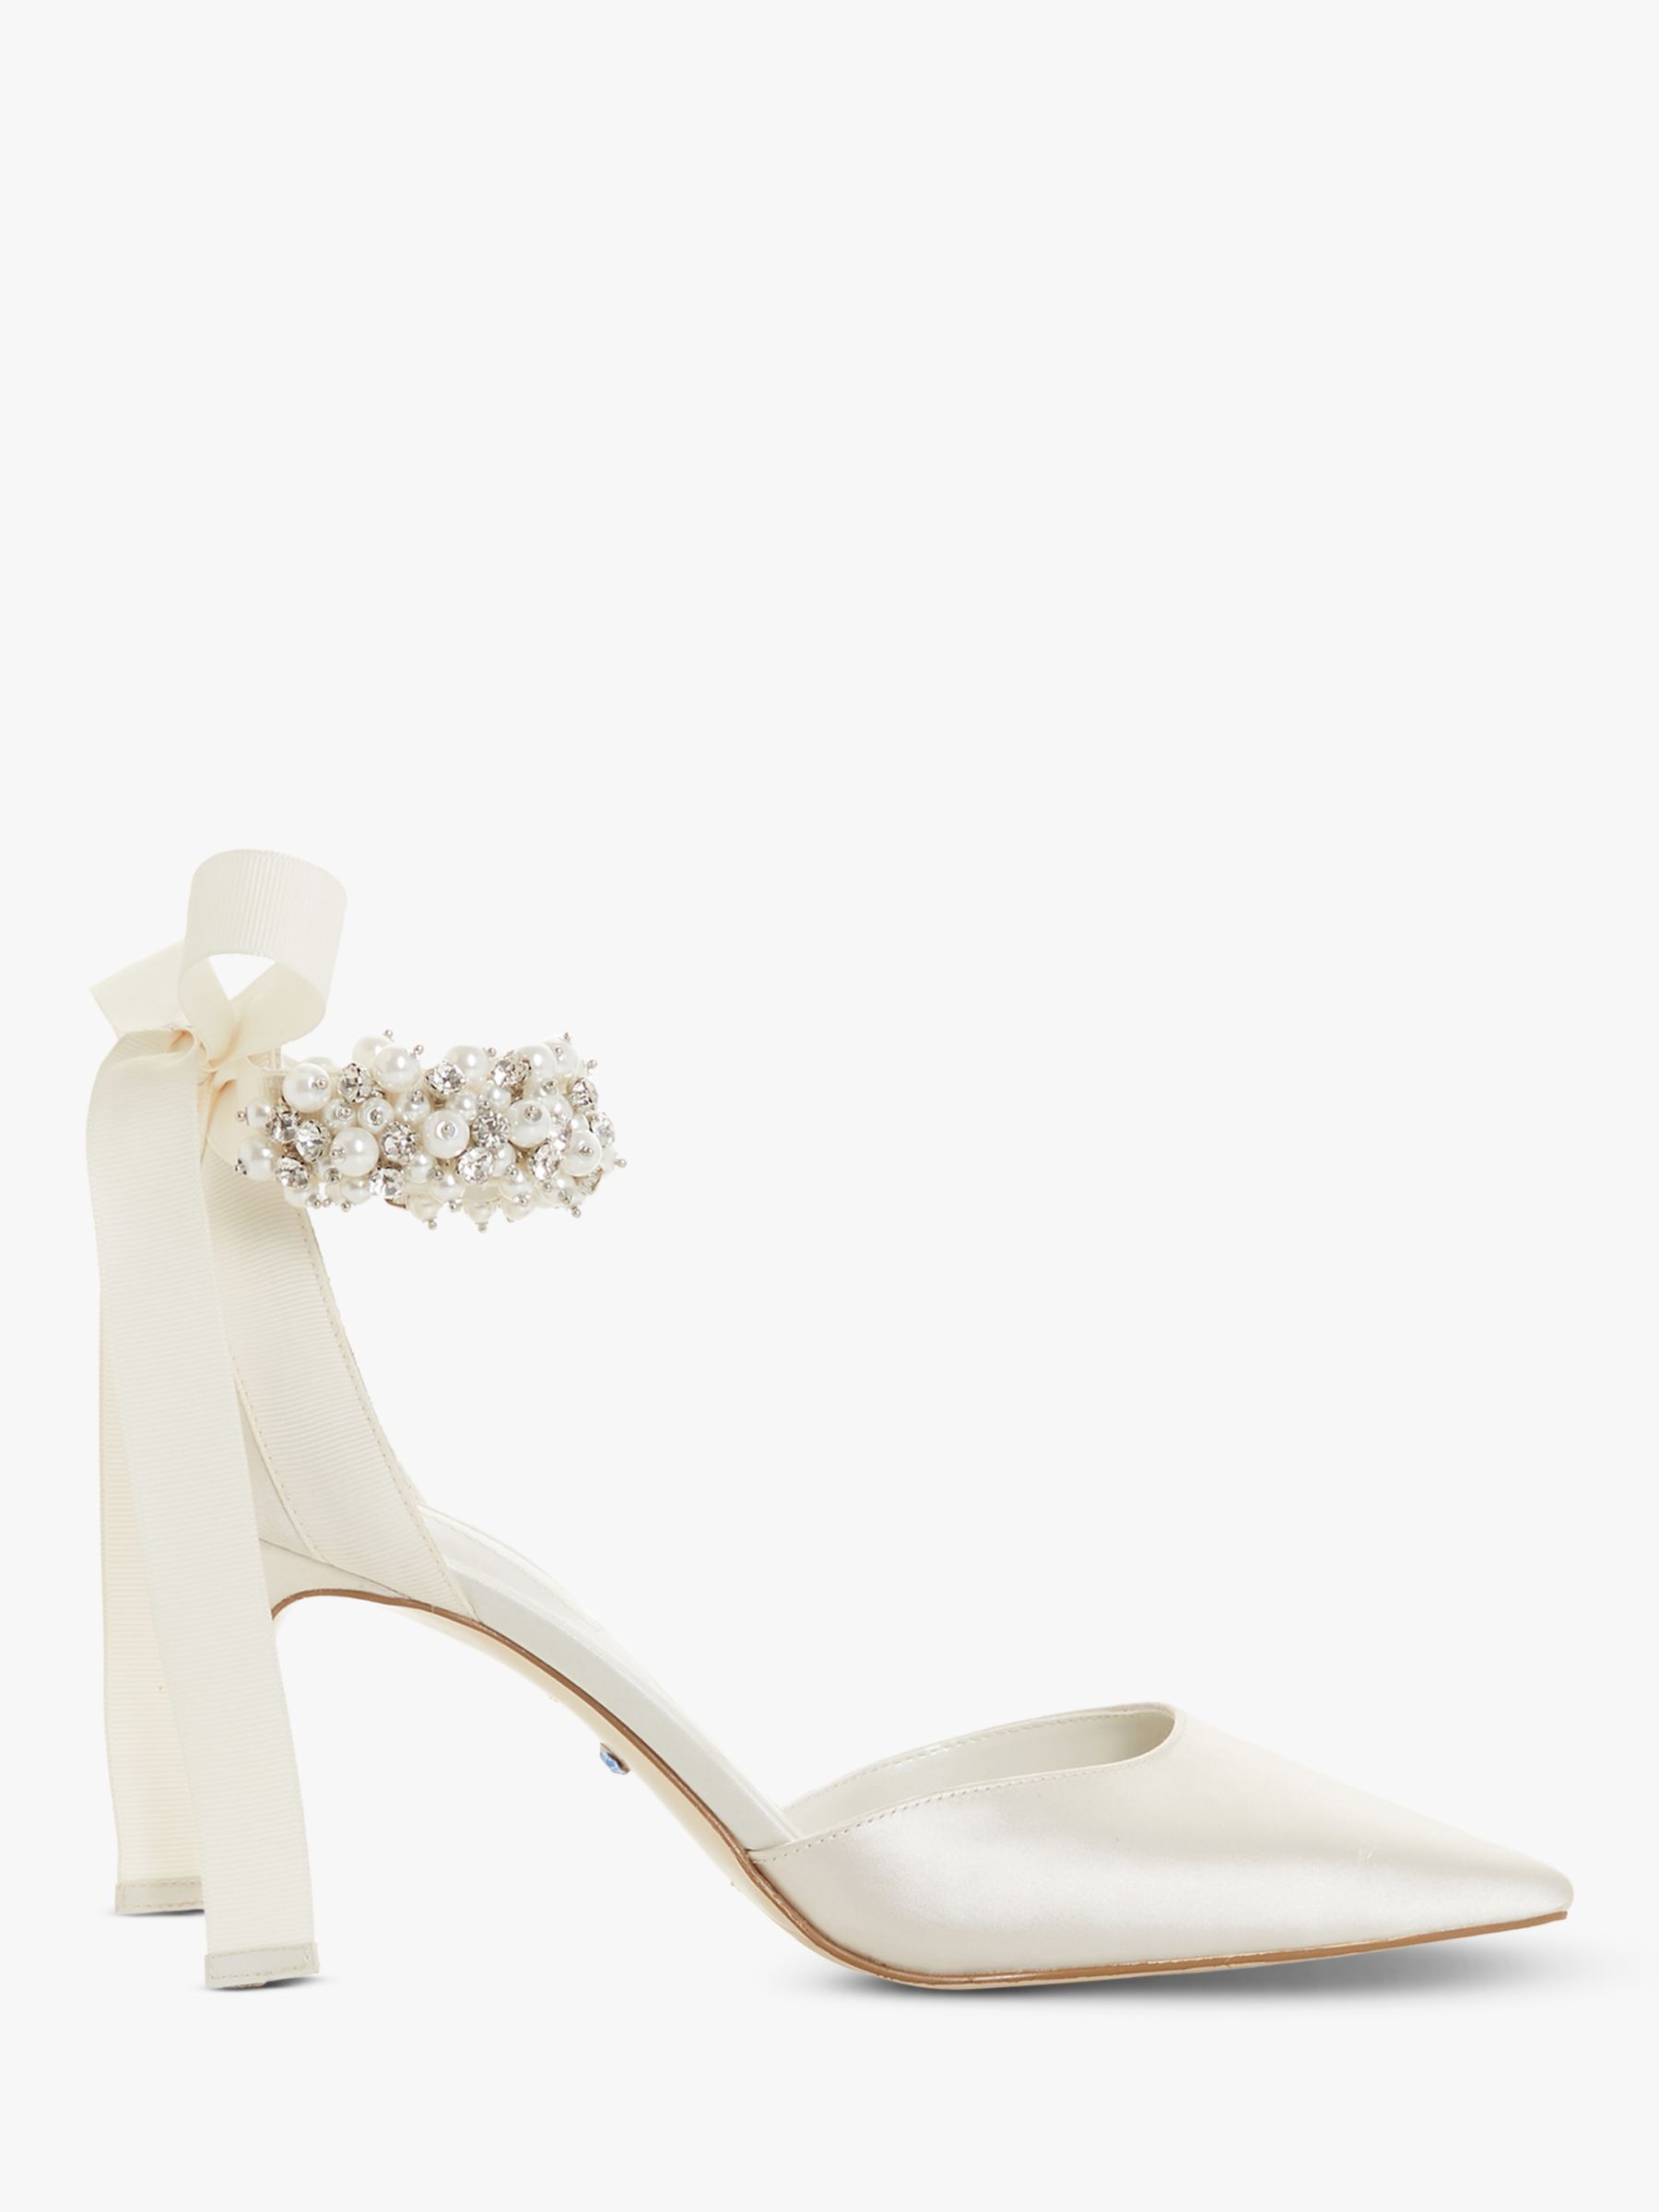 Dune Bridal Collection Clarette  Embellished Ankle Strap Court Shoes, Ivory